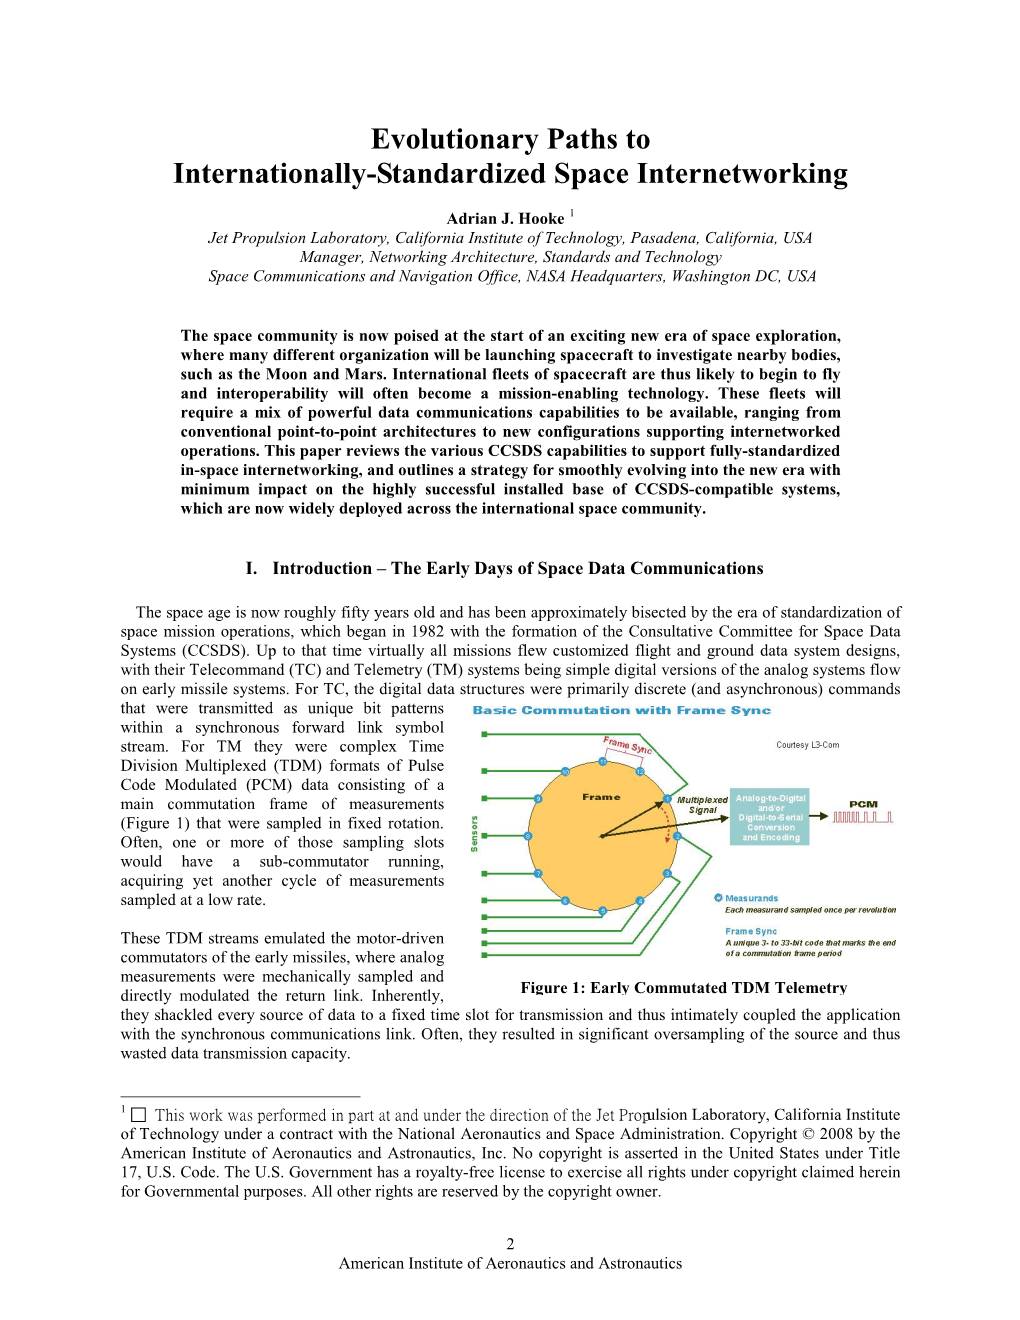 Evolutionary Paths to Internationally-Standardized Space Internetworking